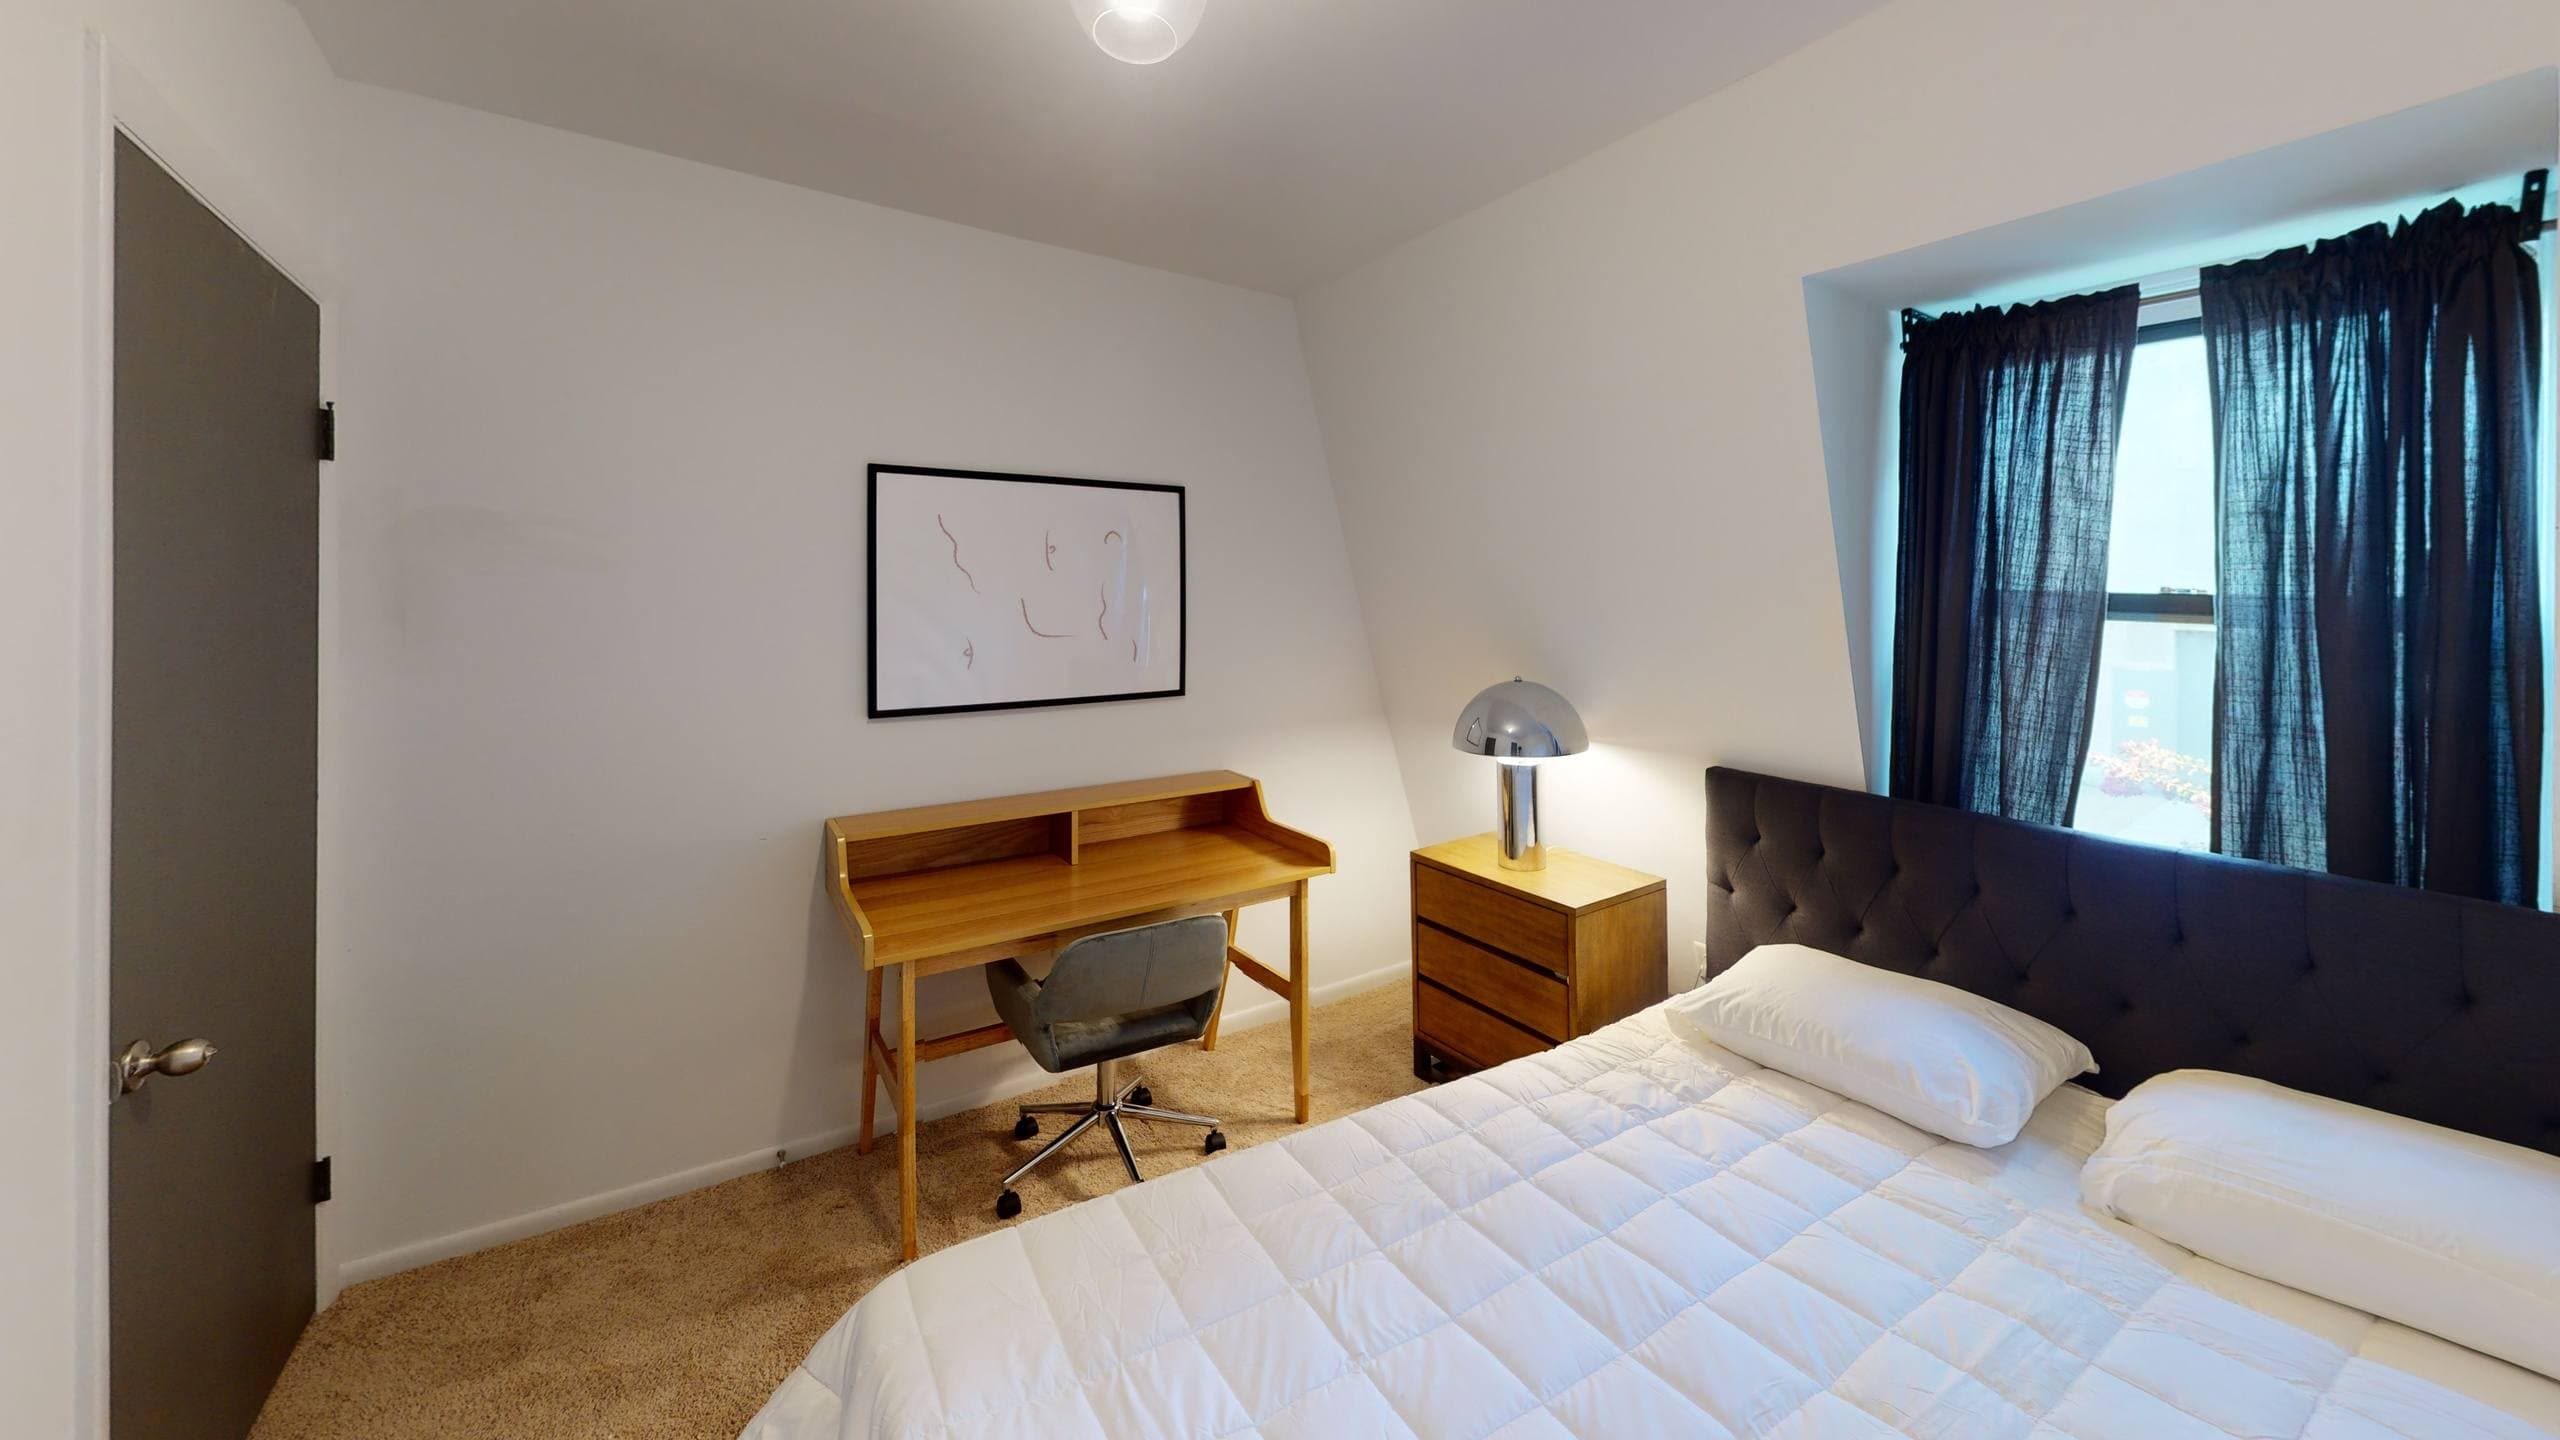 Photo 22 of #1100: Full Bedroom 2B at June Homes